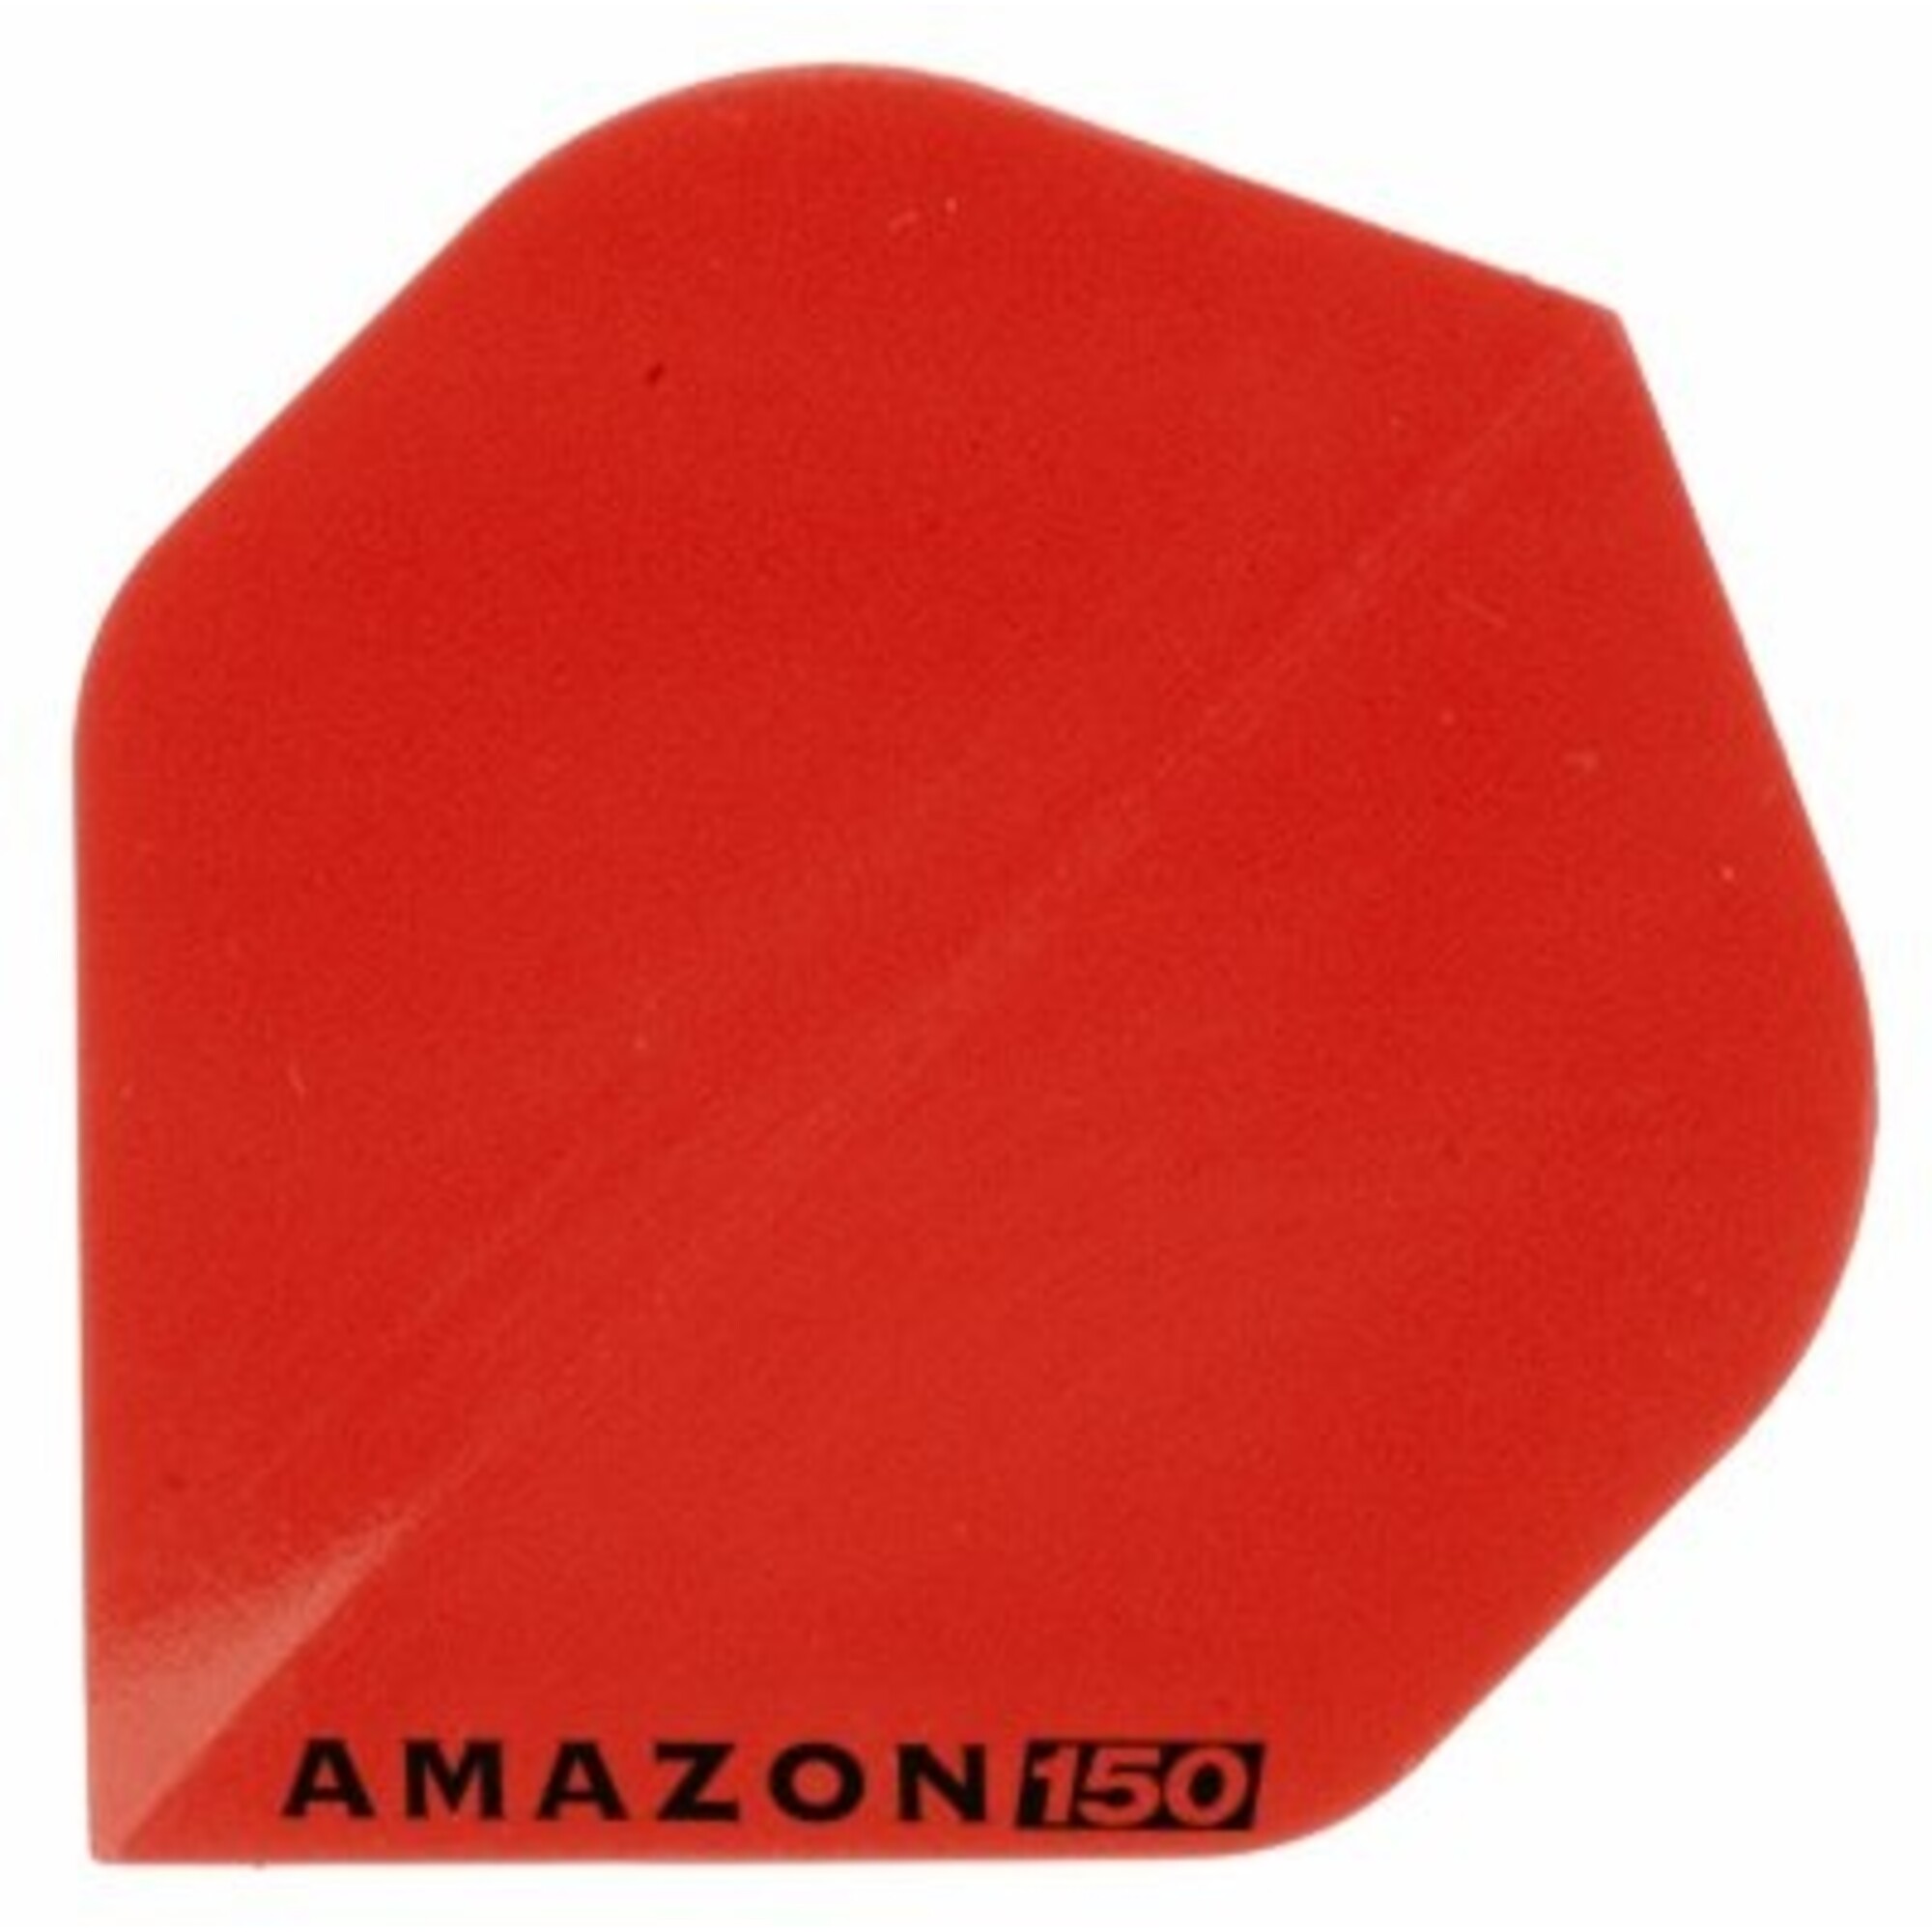 Ruthless Amazon 150 Red Darts Flights